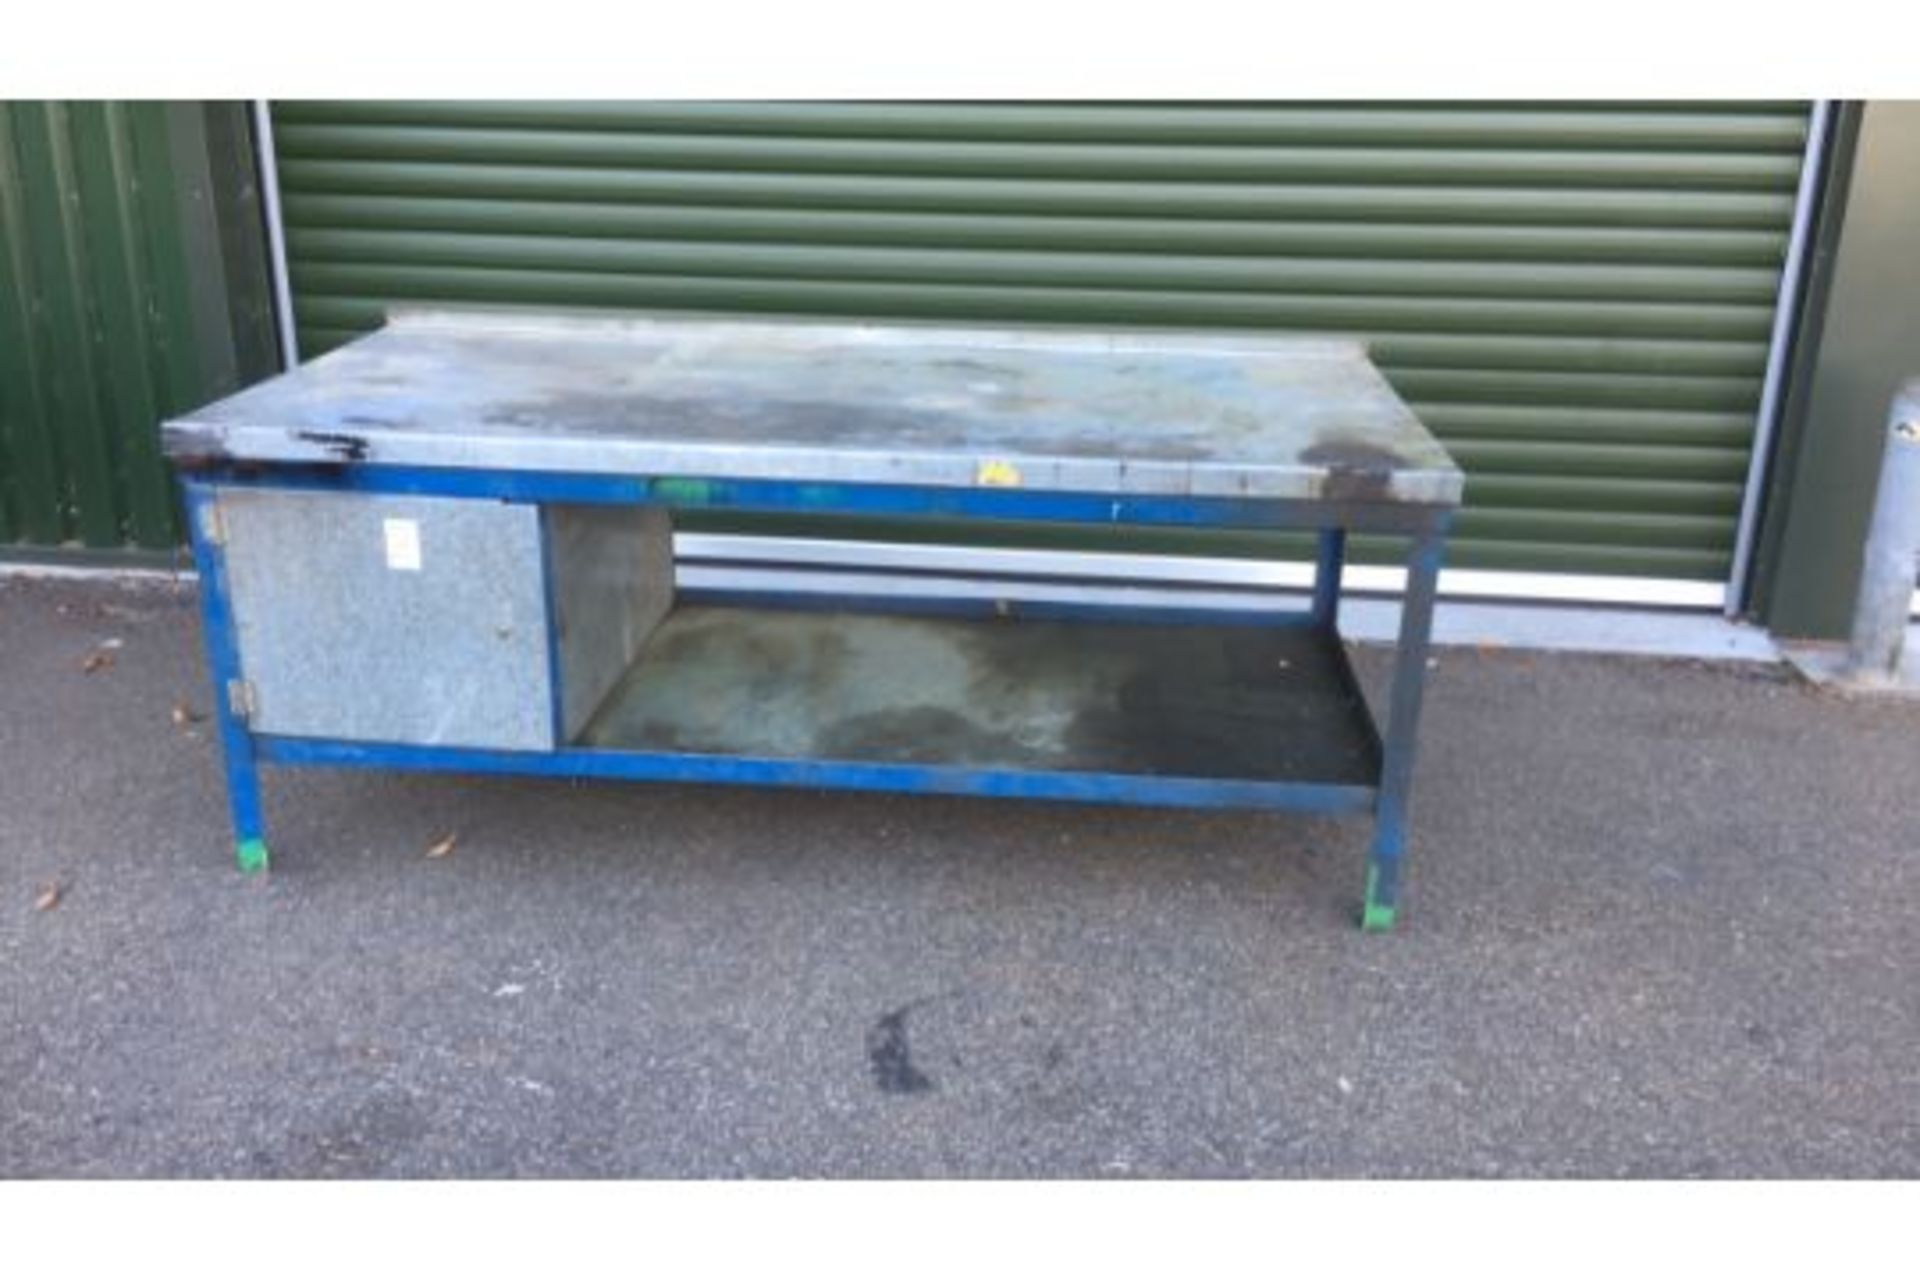 Benchmaster Steel framed work bench with locker - Image 2 of 2